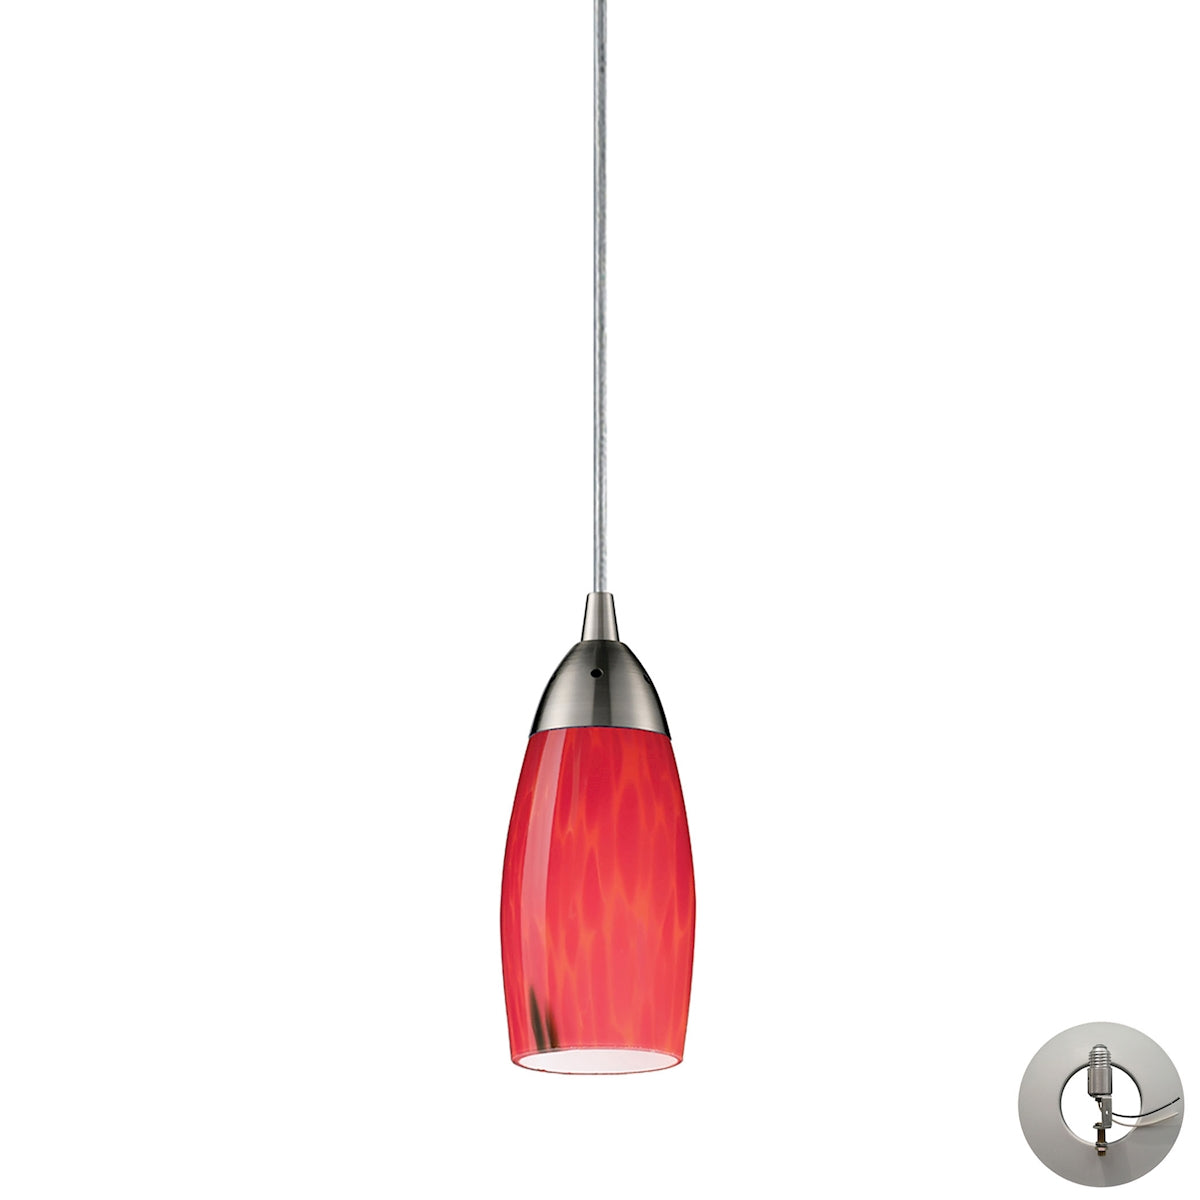 ELK Lighting 110-1FR-LA Milan 1-Light Mini Pendant in Satin Nickel with Fire Red Glass - Includes Adapter Kit